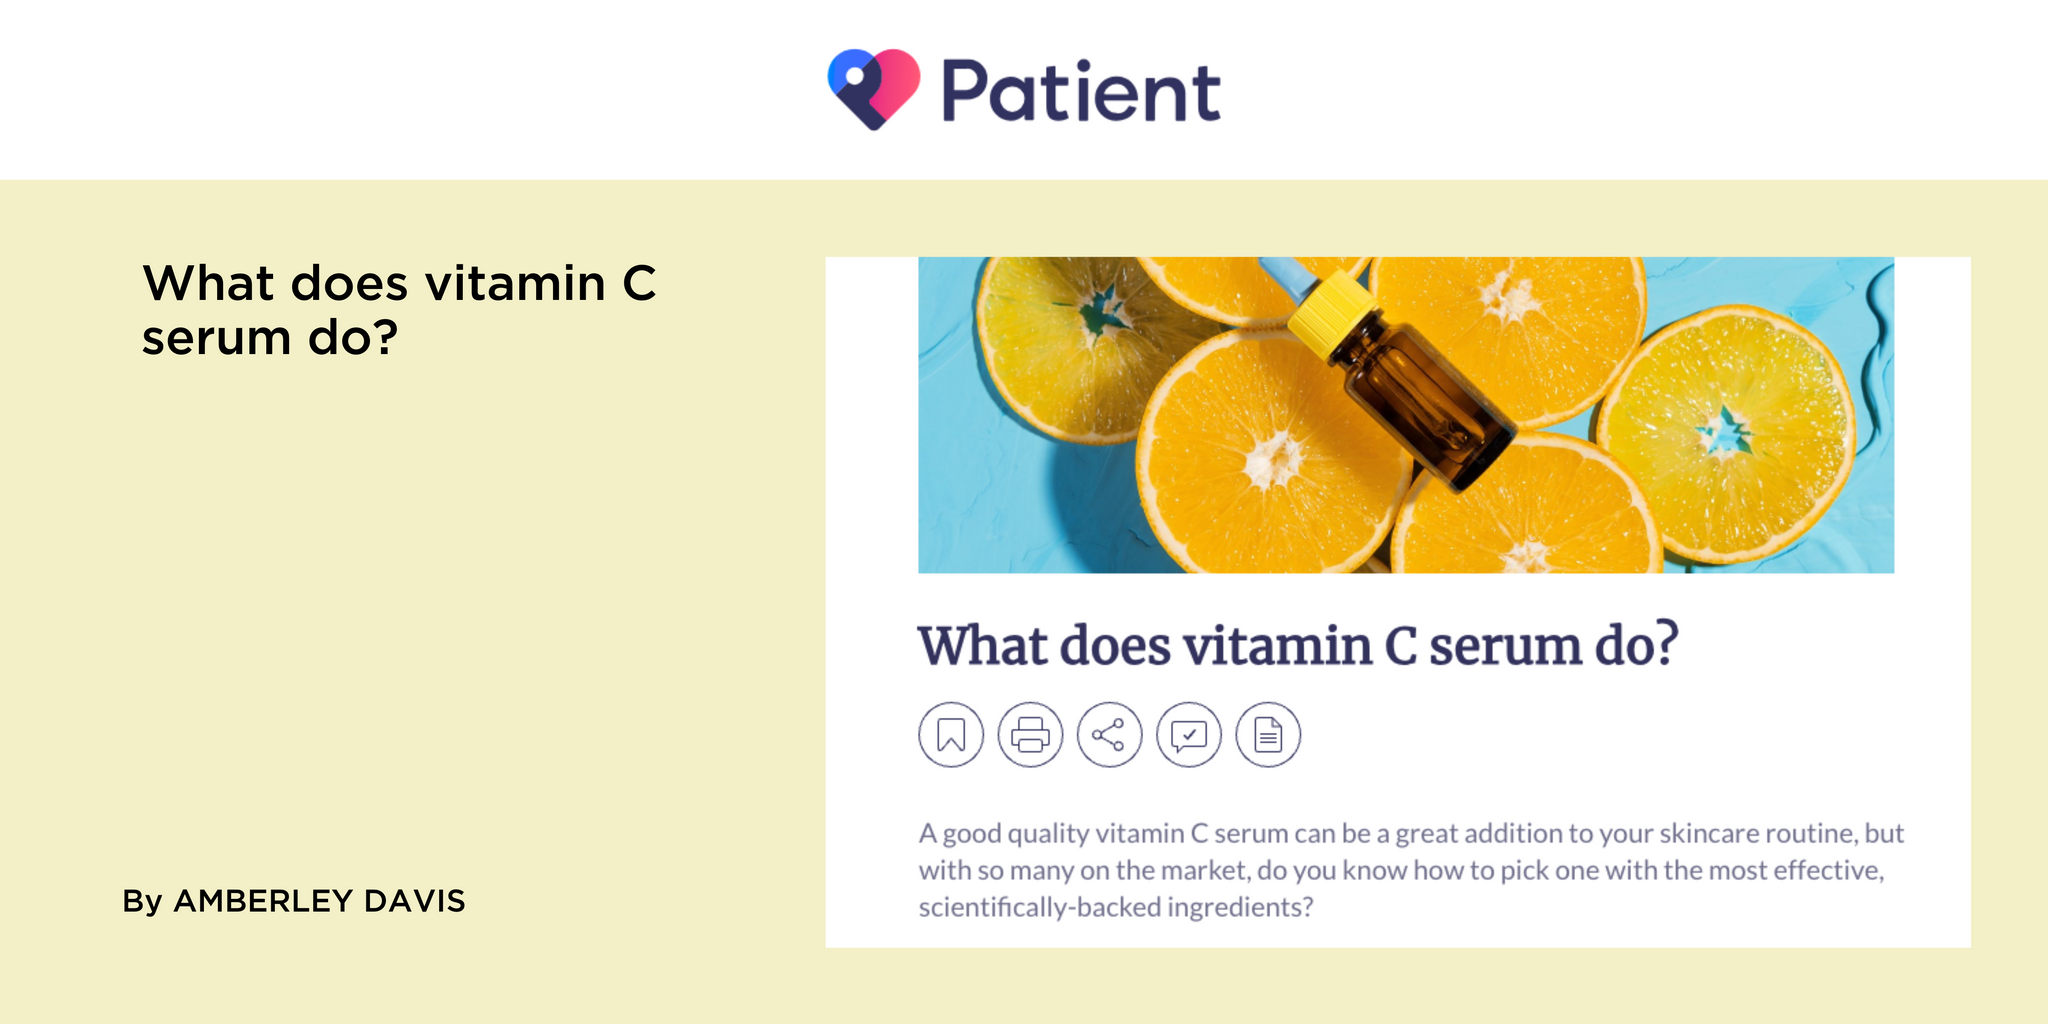 What does vitamin C serum do?